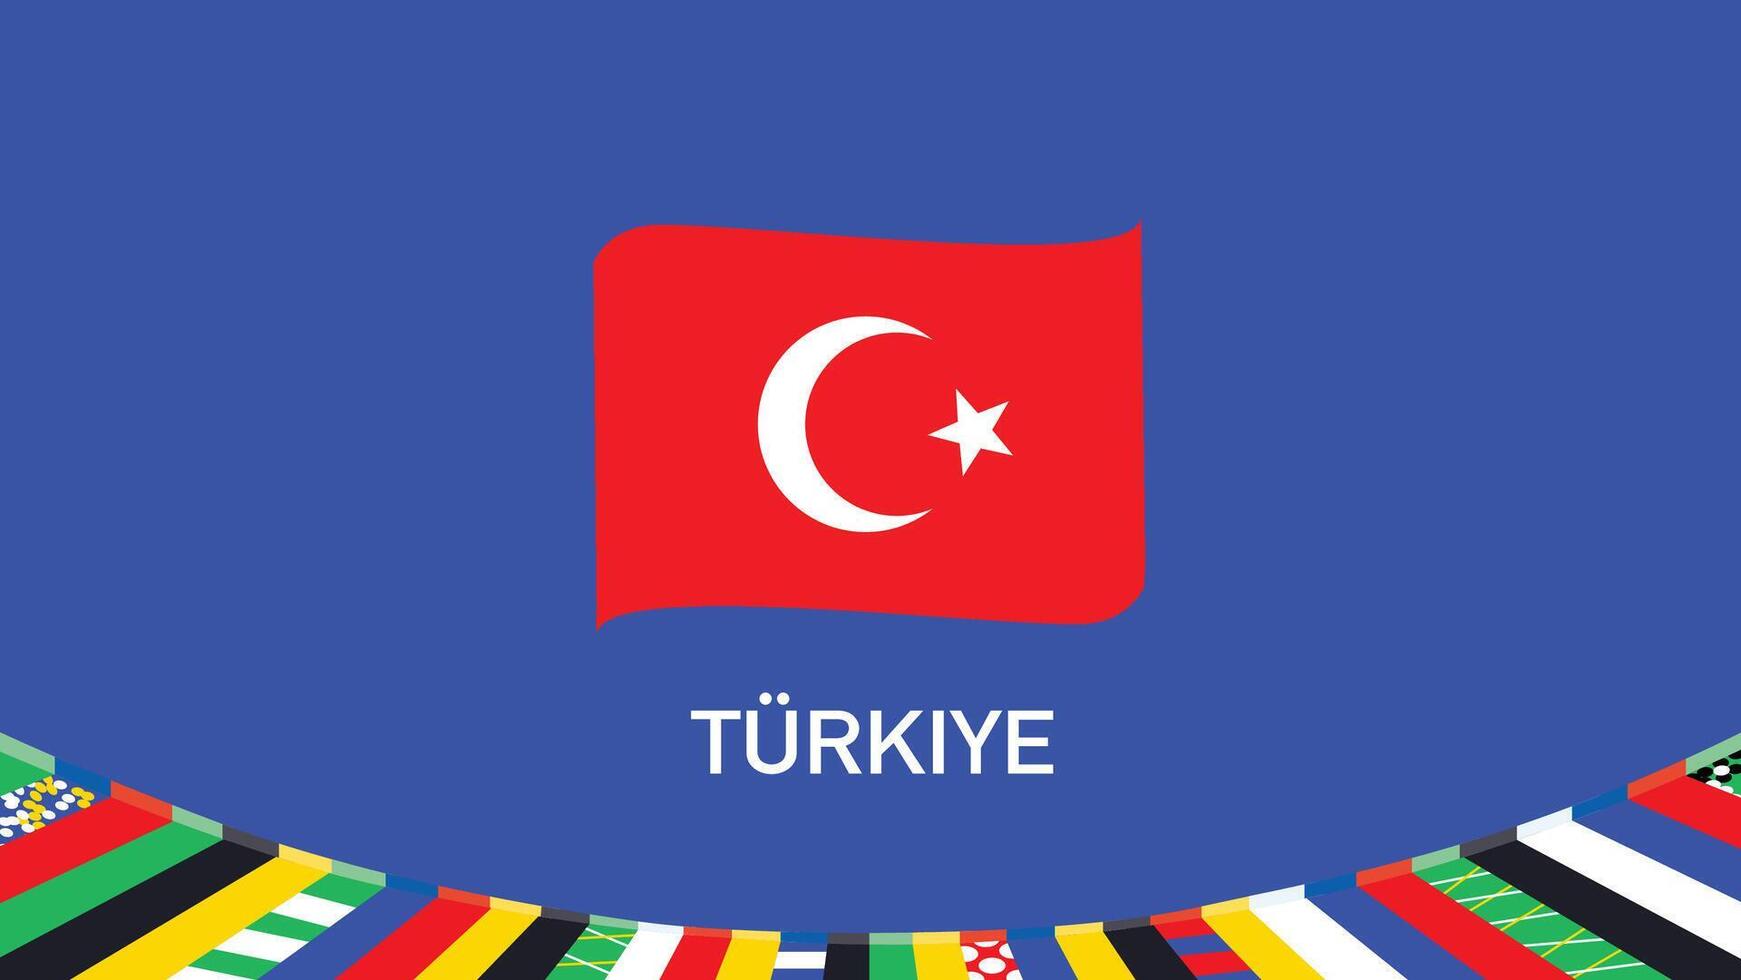 turkiye embleem teams Europese landen 2024 symbool abstract landen Europese Duitsland Amerikaans voetbal logo ontwerp illustratie vector